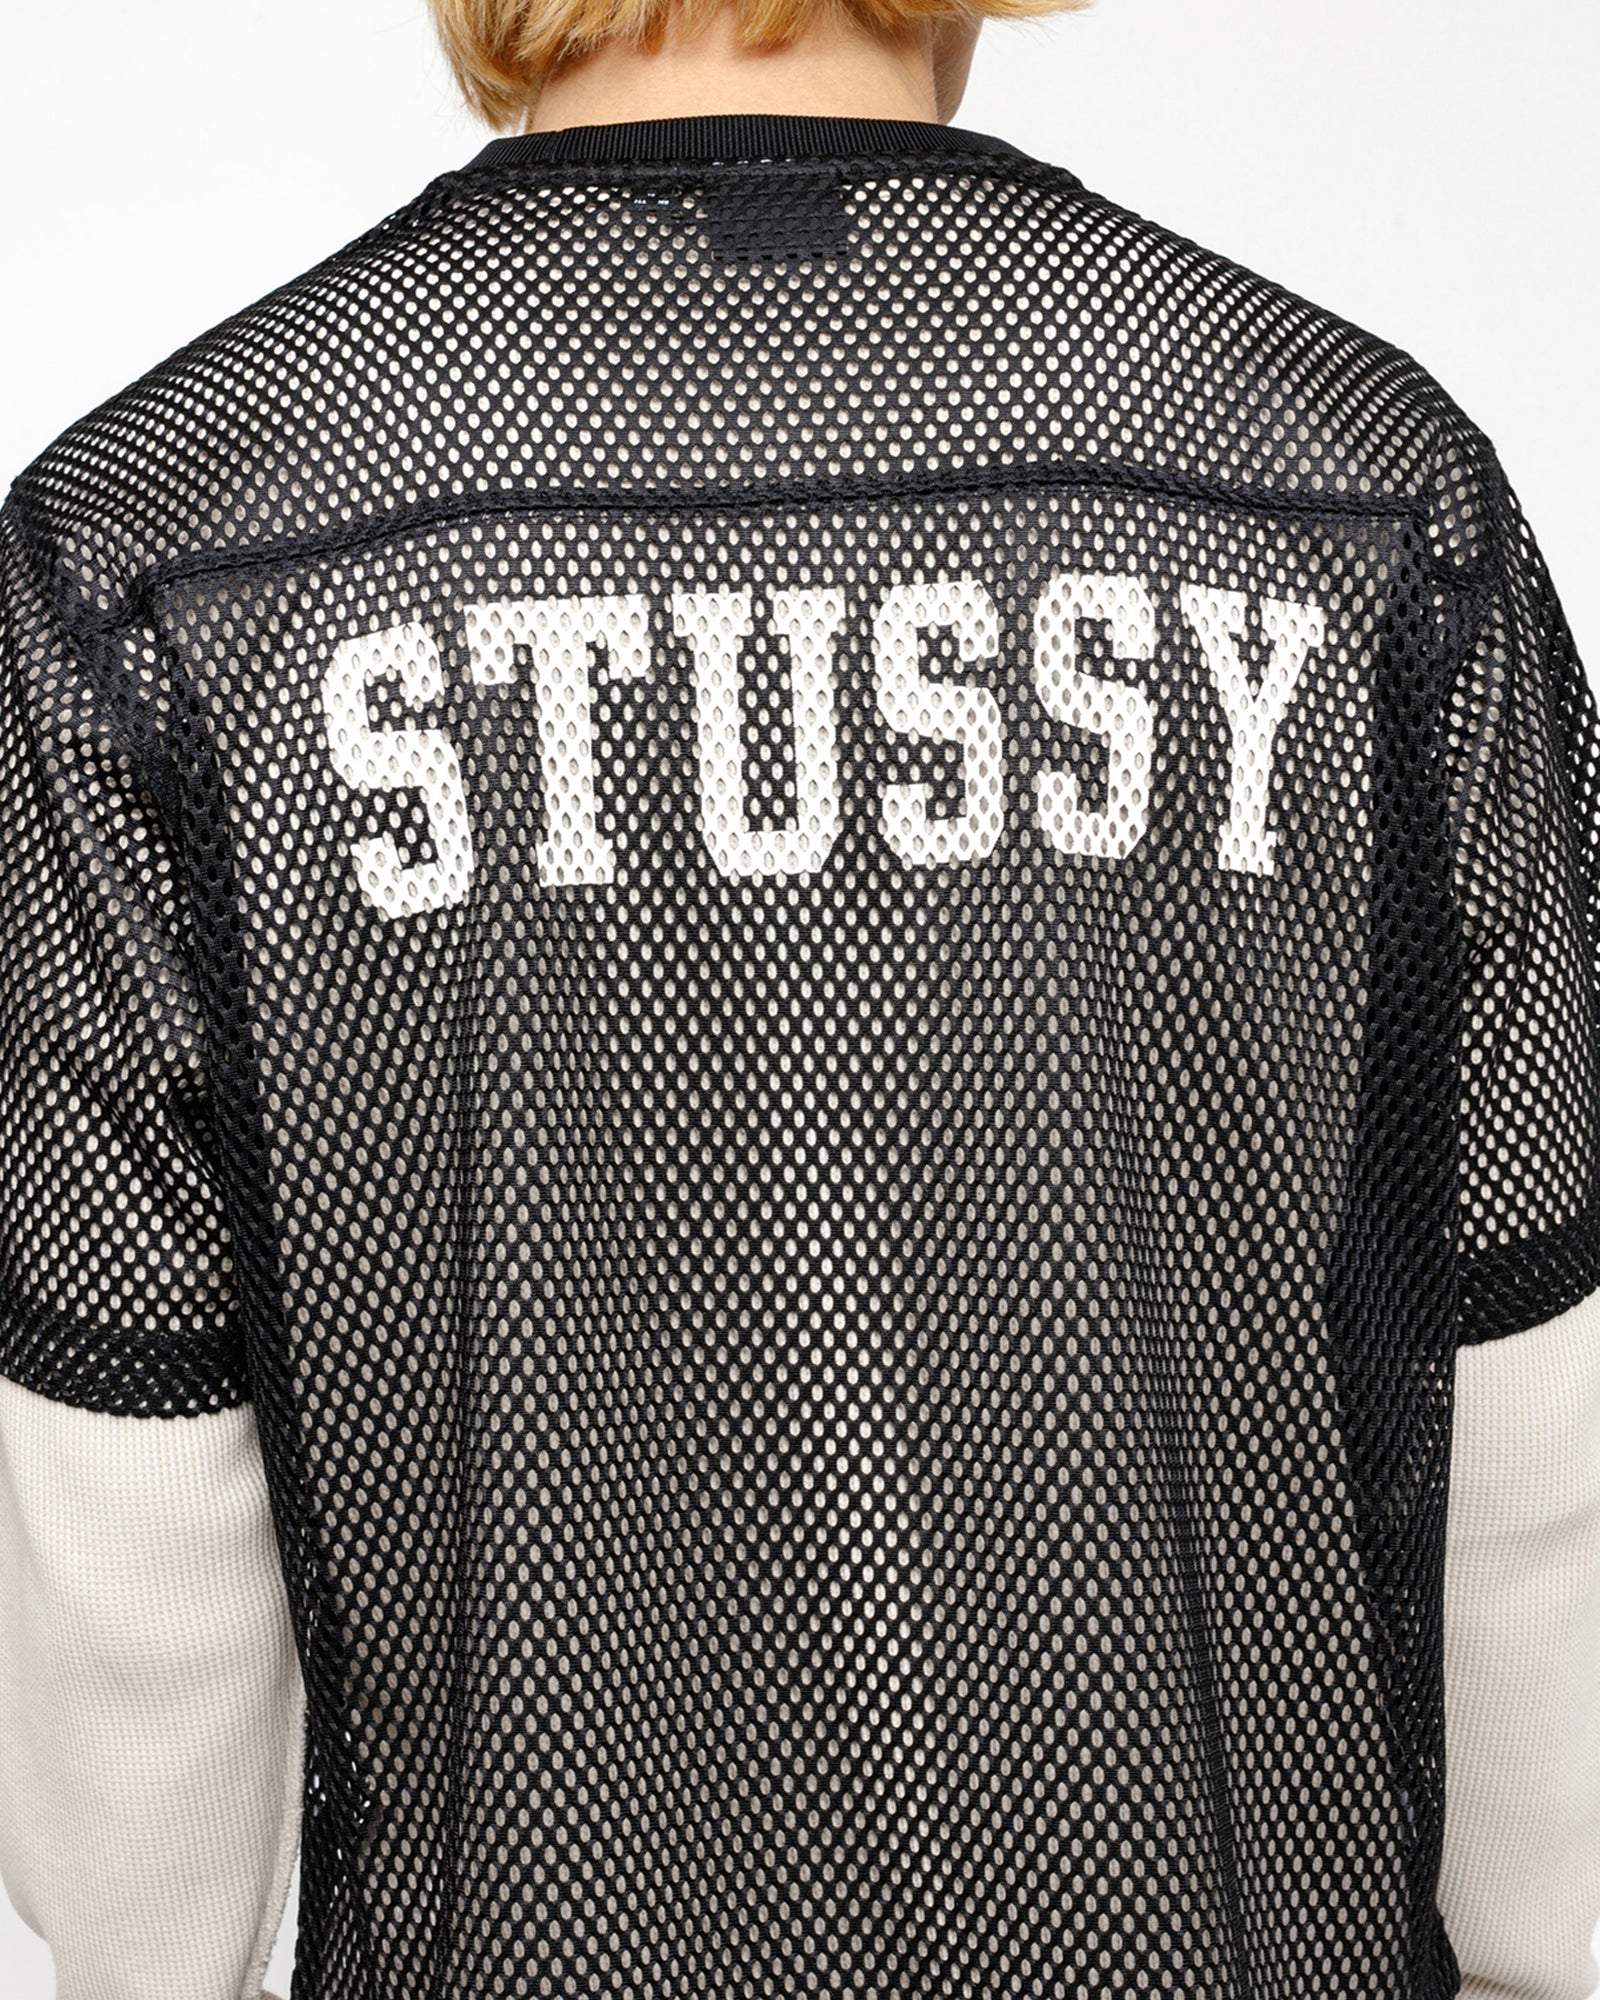 Stüssy Team Jersey 80 Black Tops